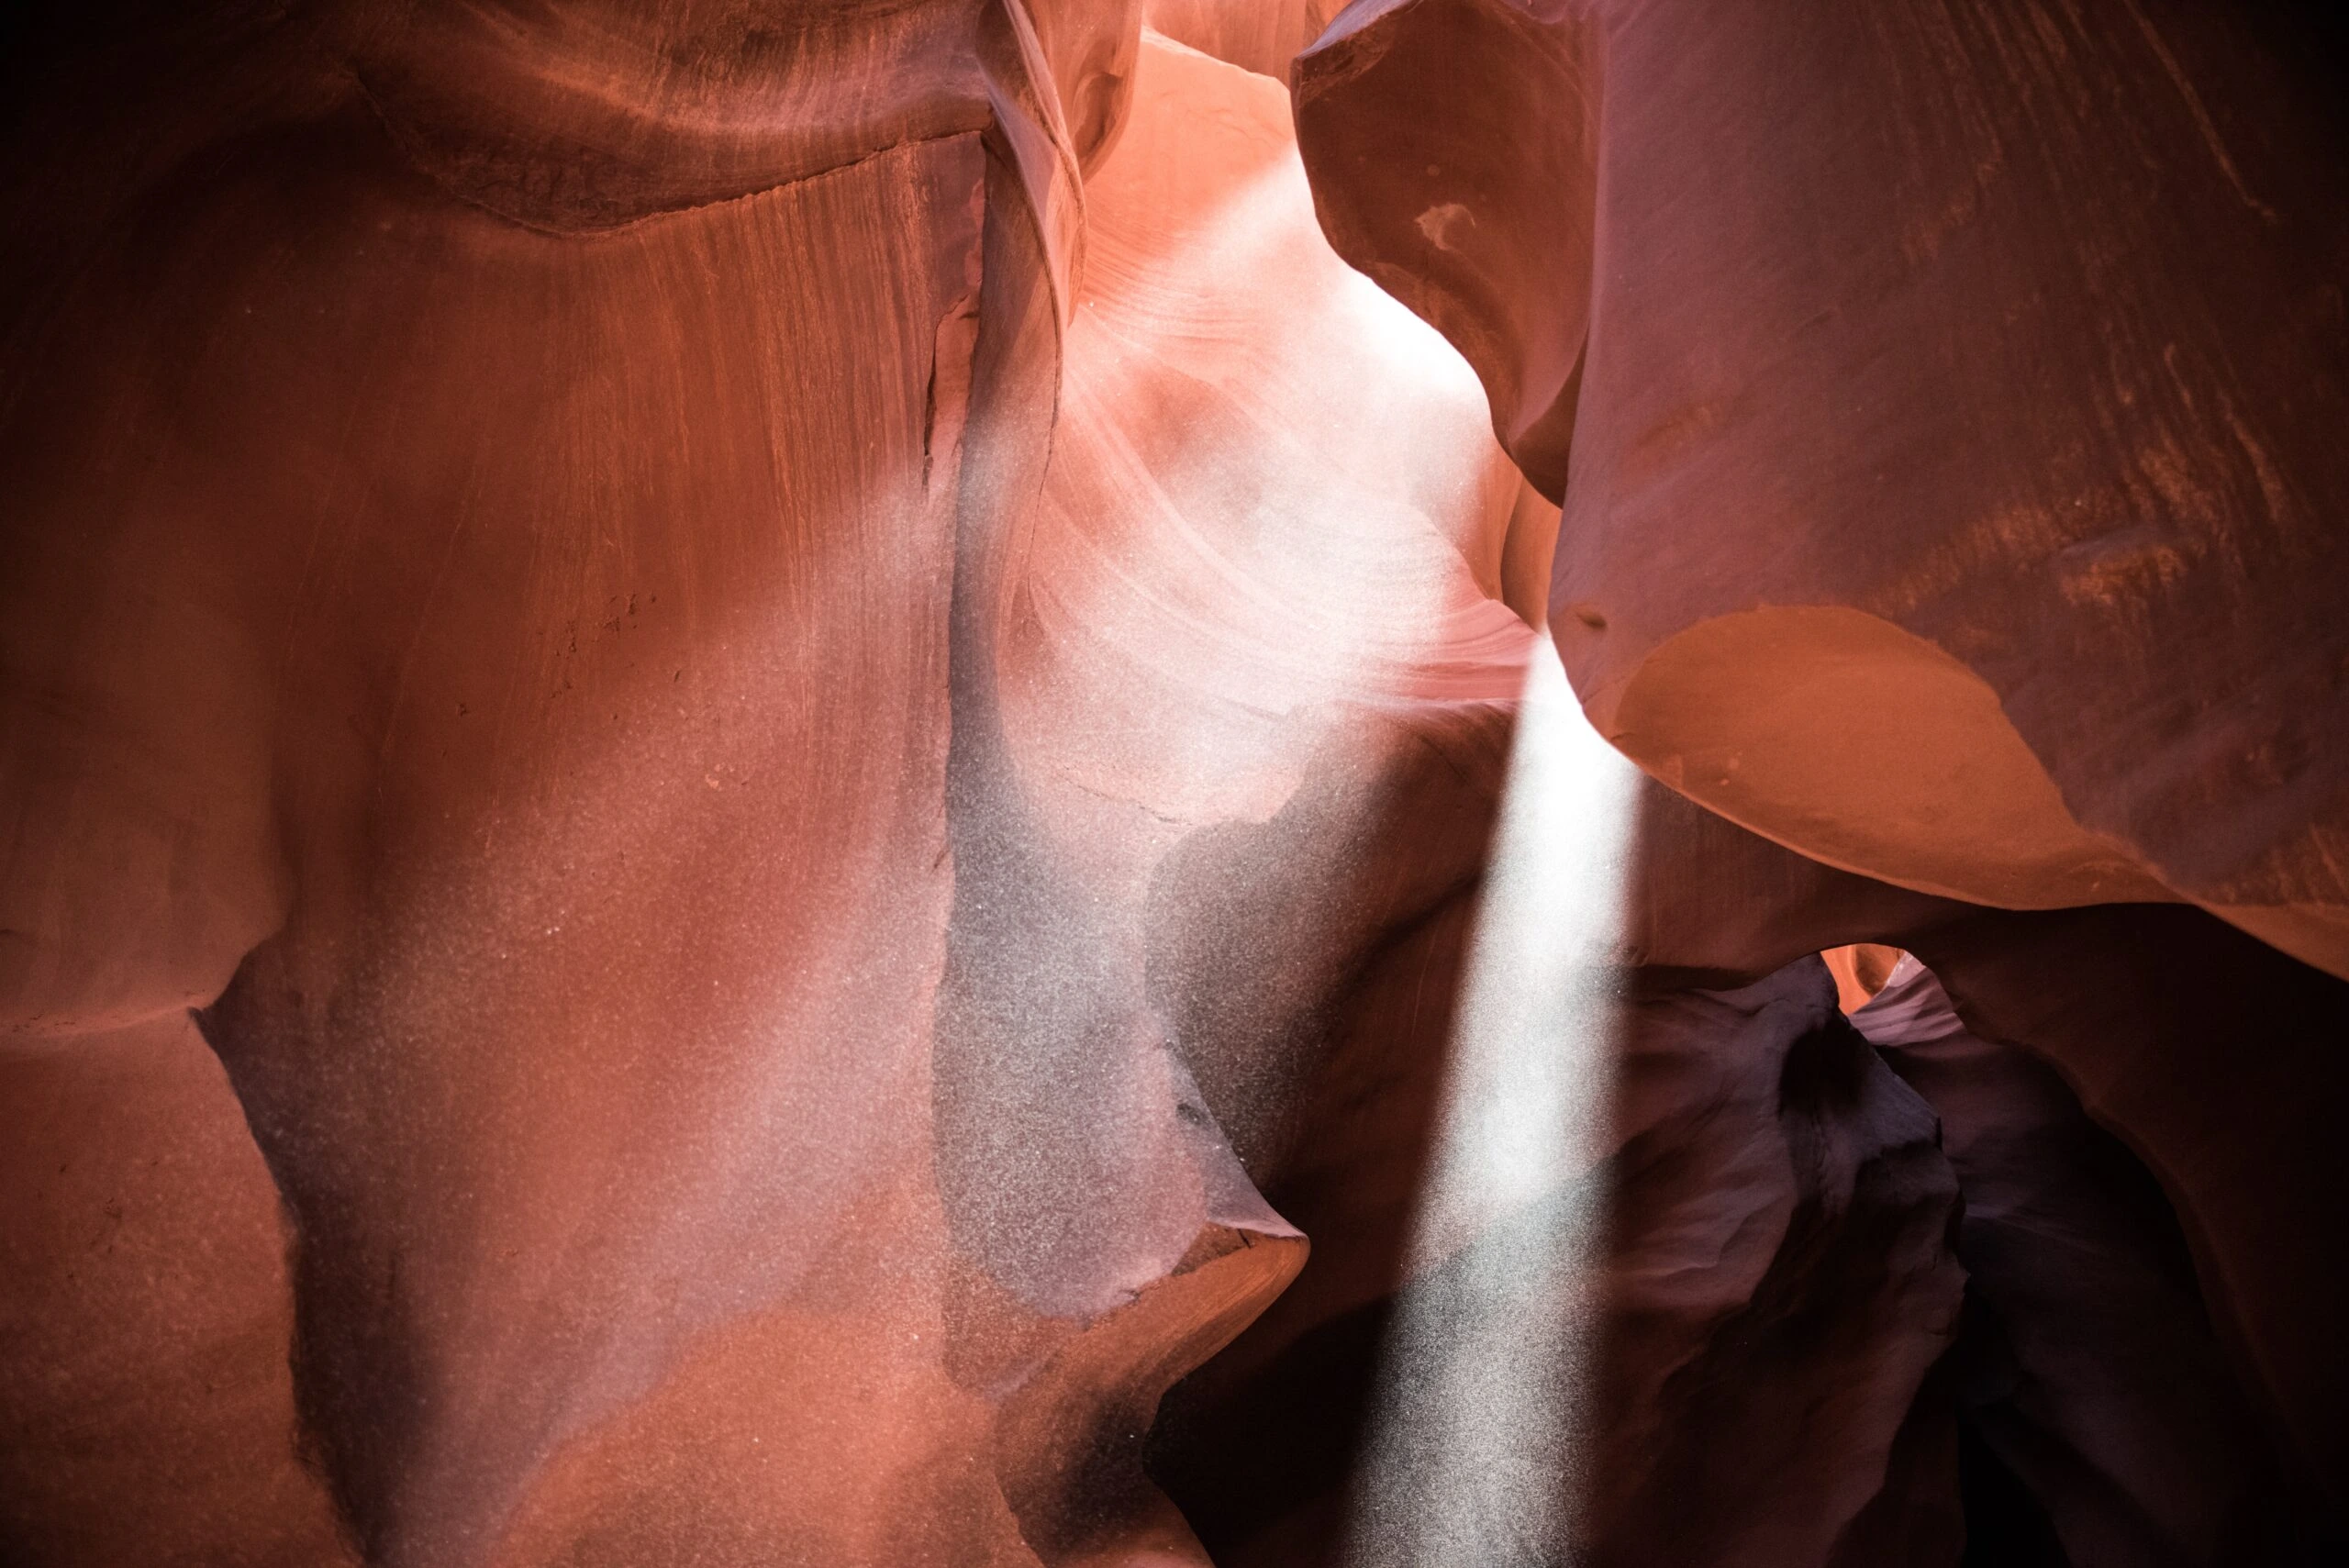 justin-luebke-Sunlight through red canyon crevice-unsplash